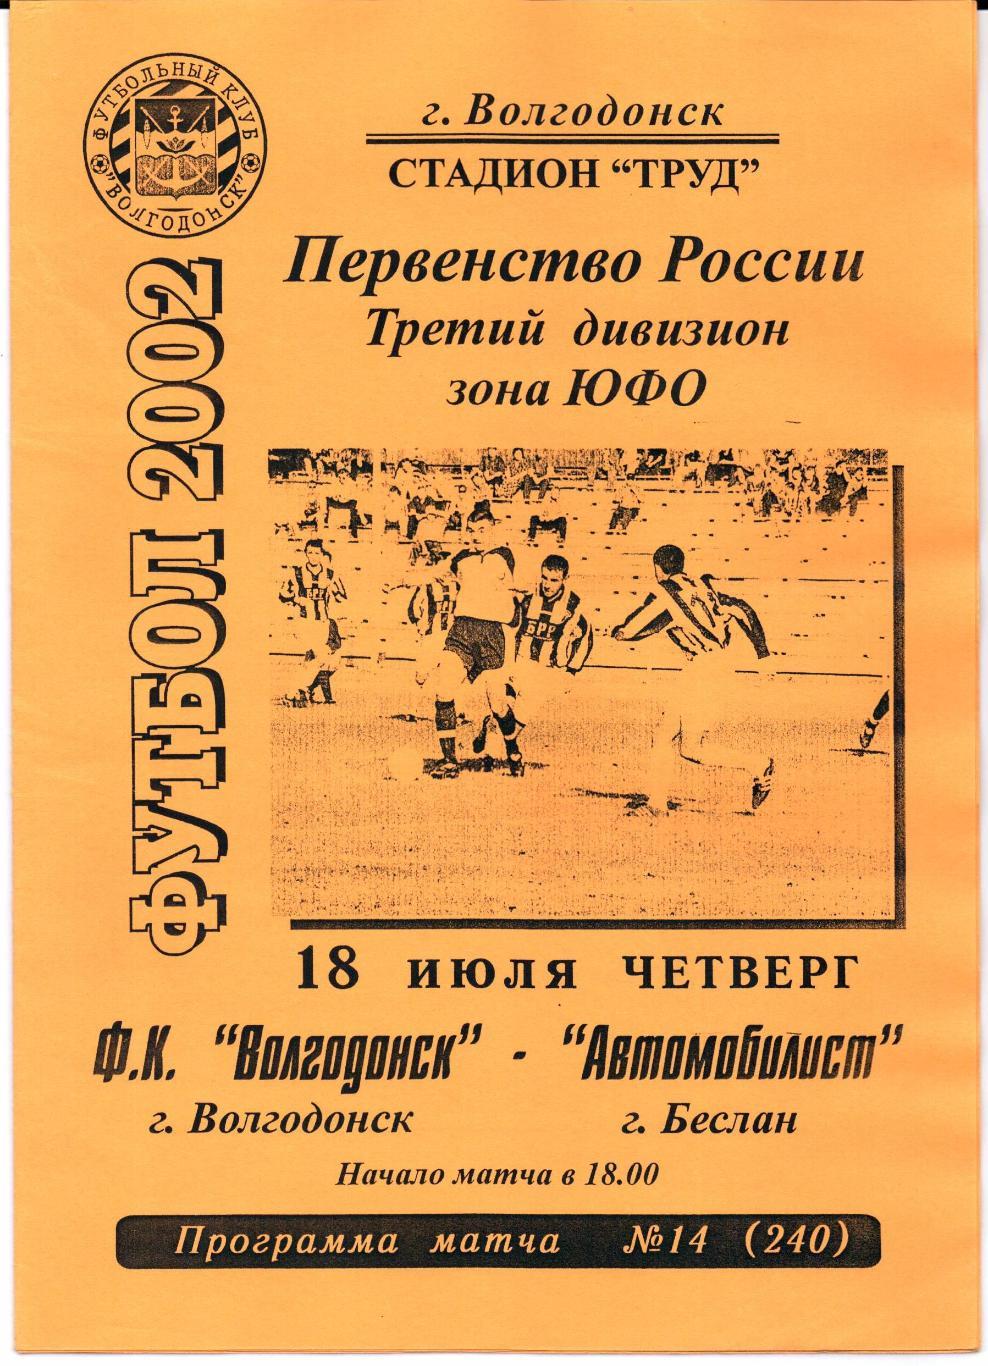 3 дивизион зонаЮФОФК Волгодонск(Волгодонск)-Автом обилист(Беслан)18.07.2002